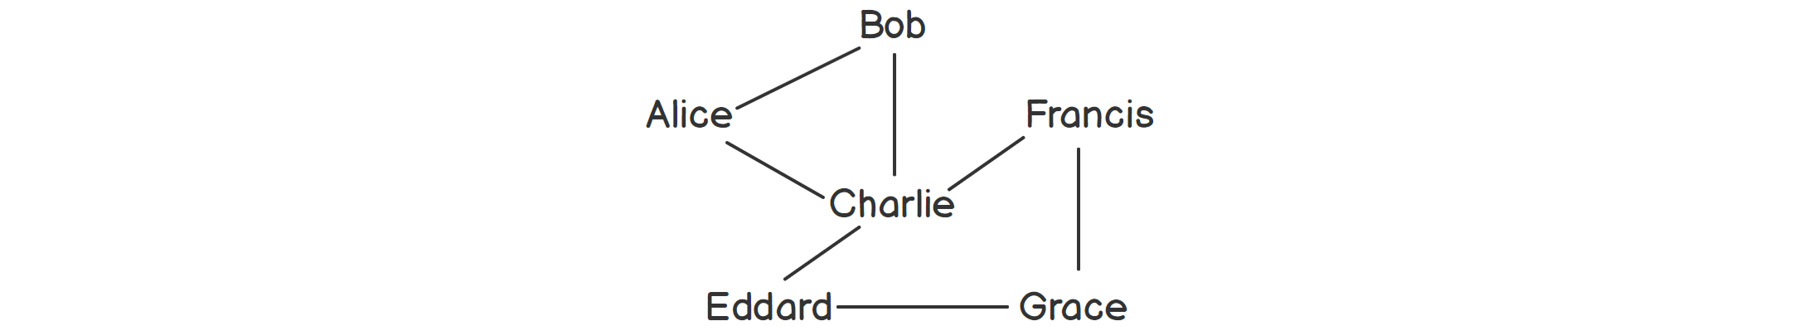 Figure 2.3: A network of friends